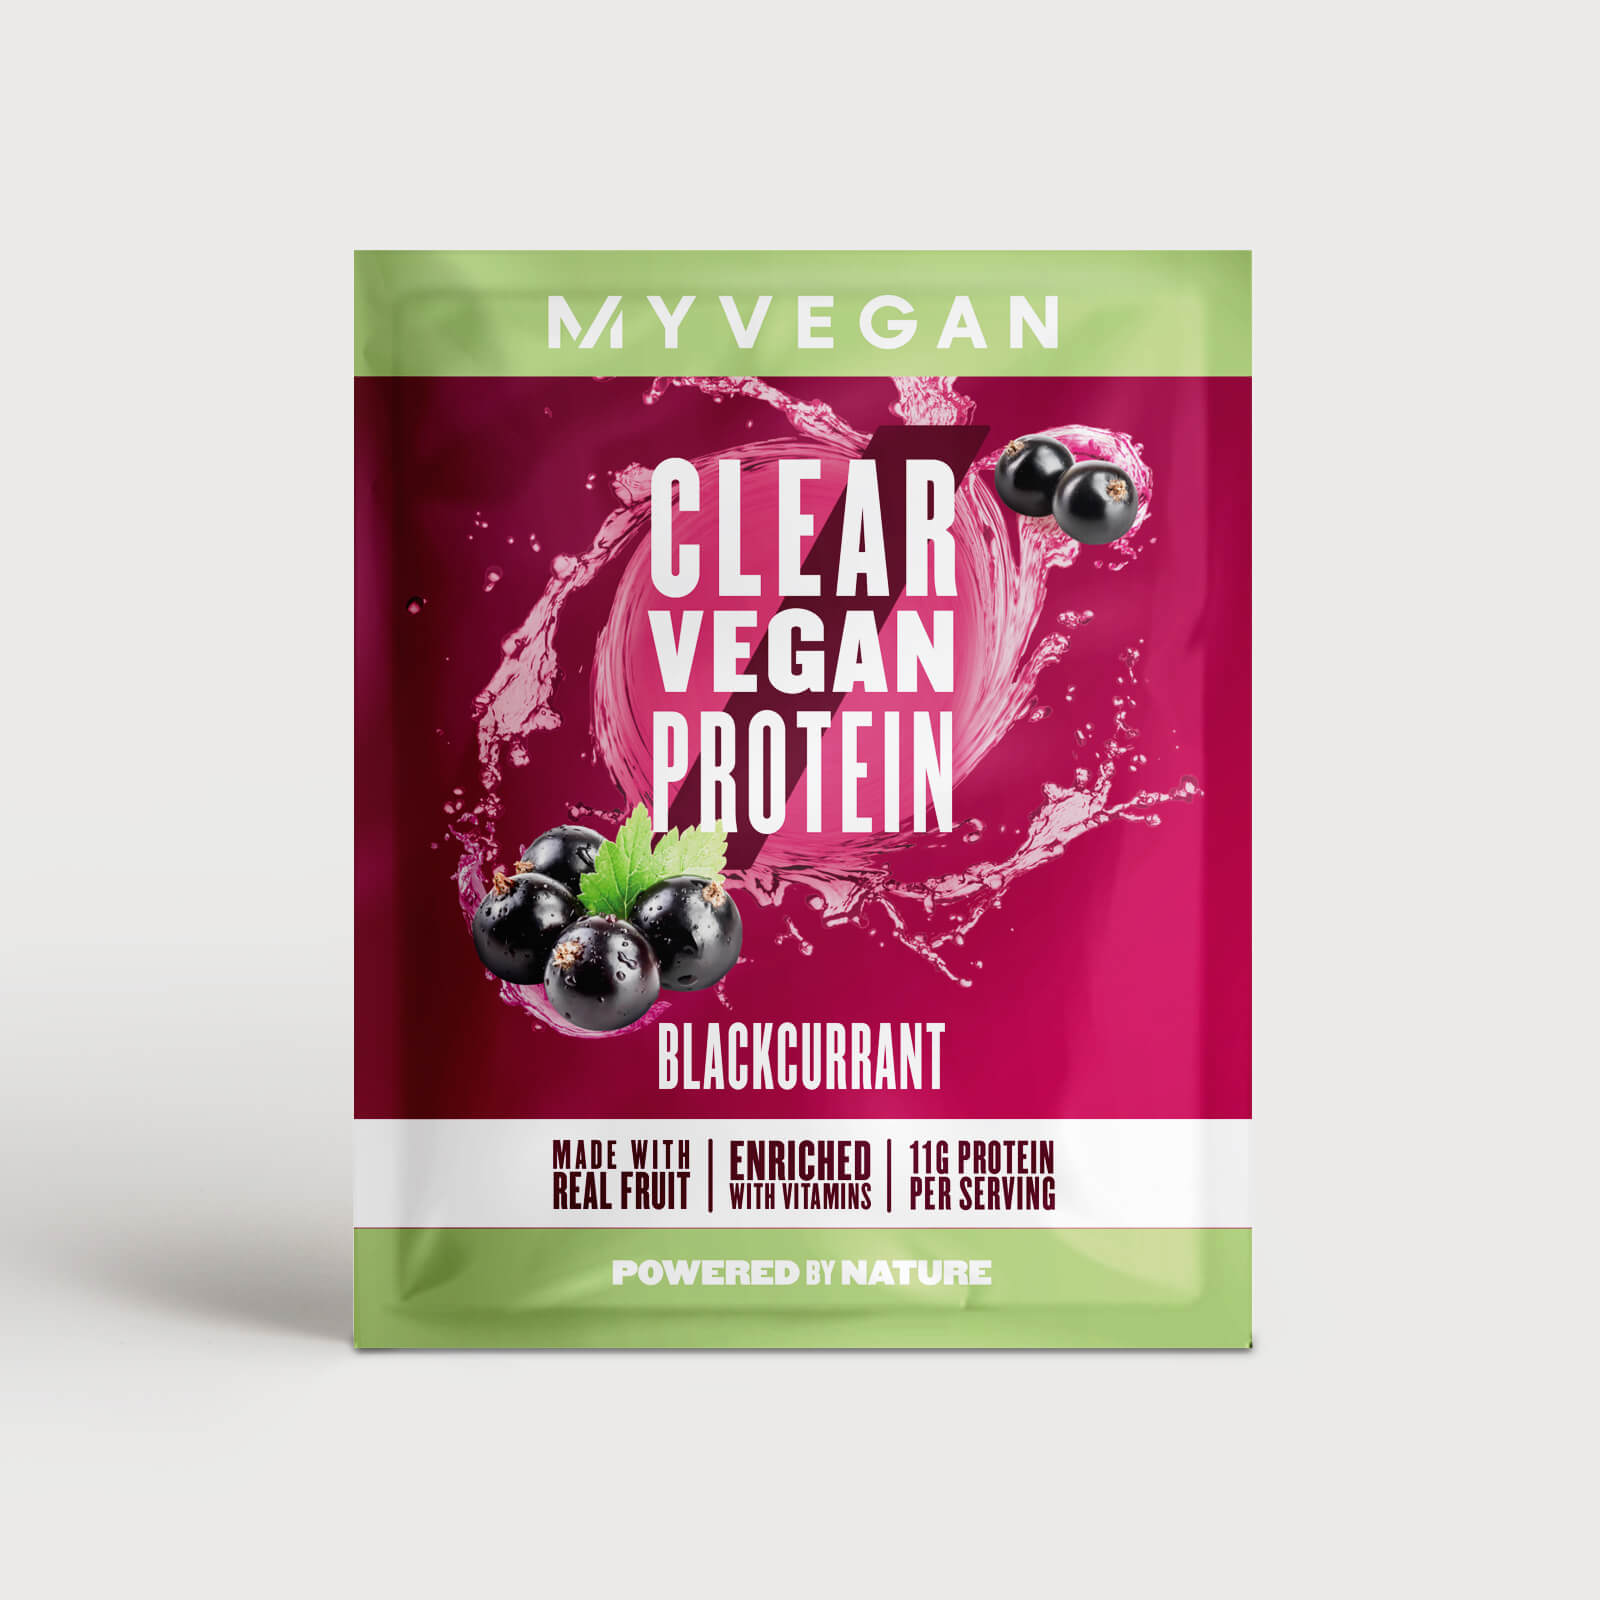 Myvegan Clear Vegan Protein, 16g (Sample) - 16g - Cassis